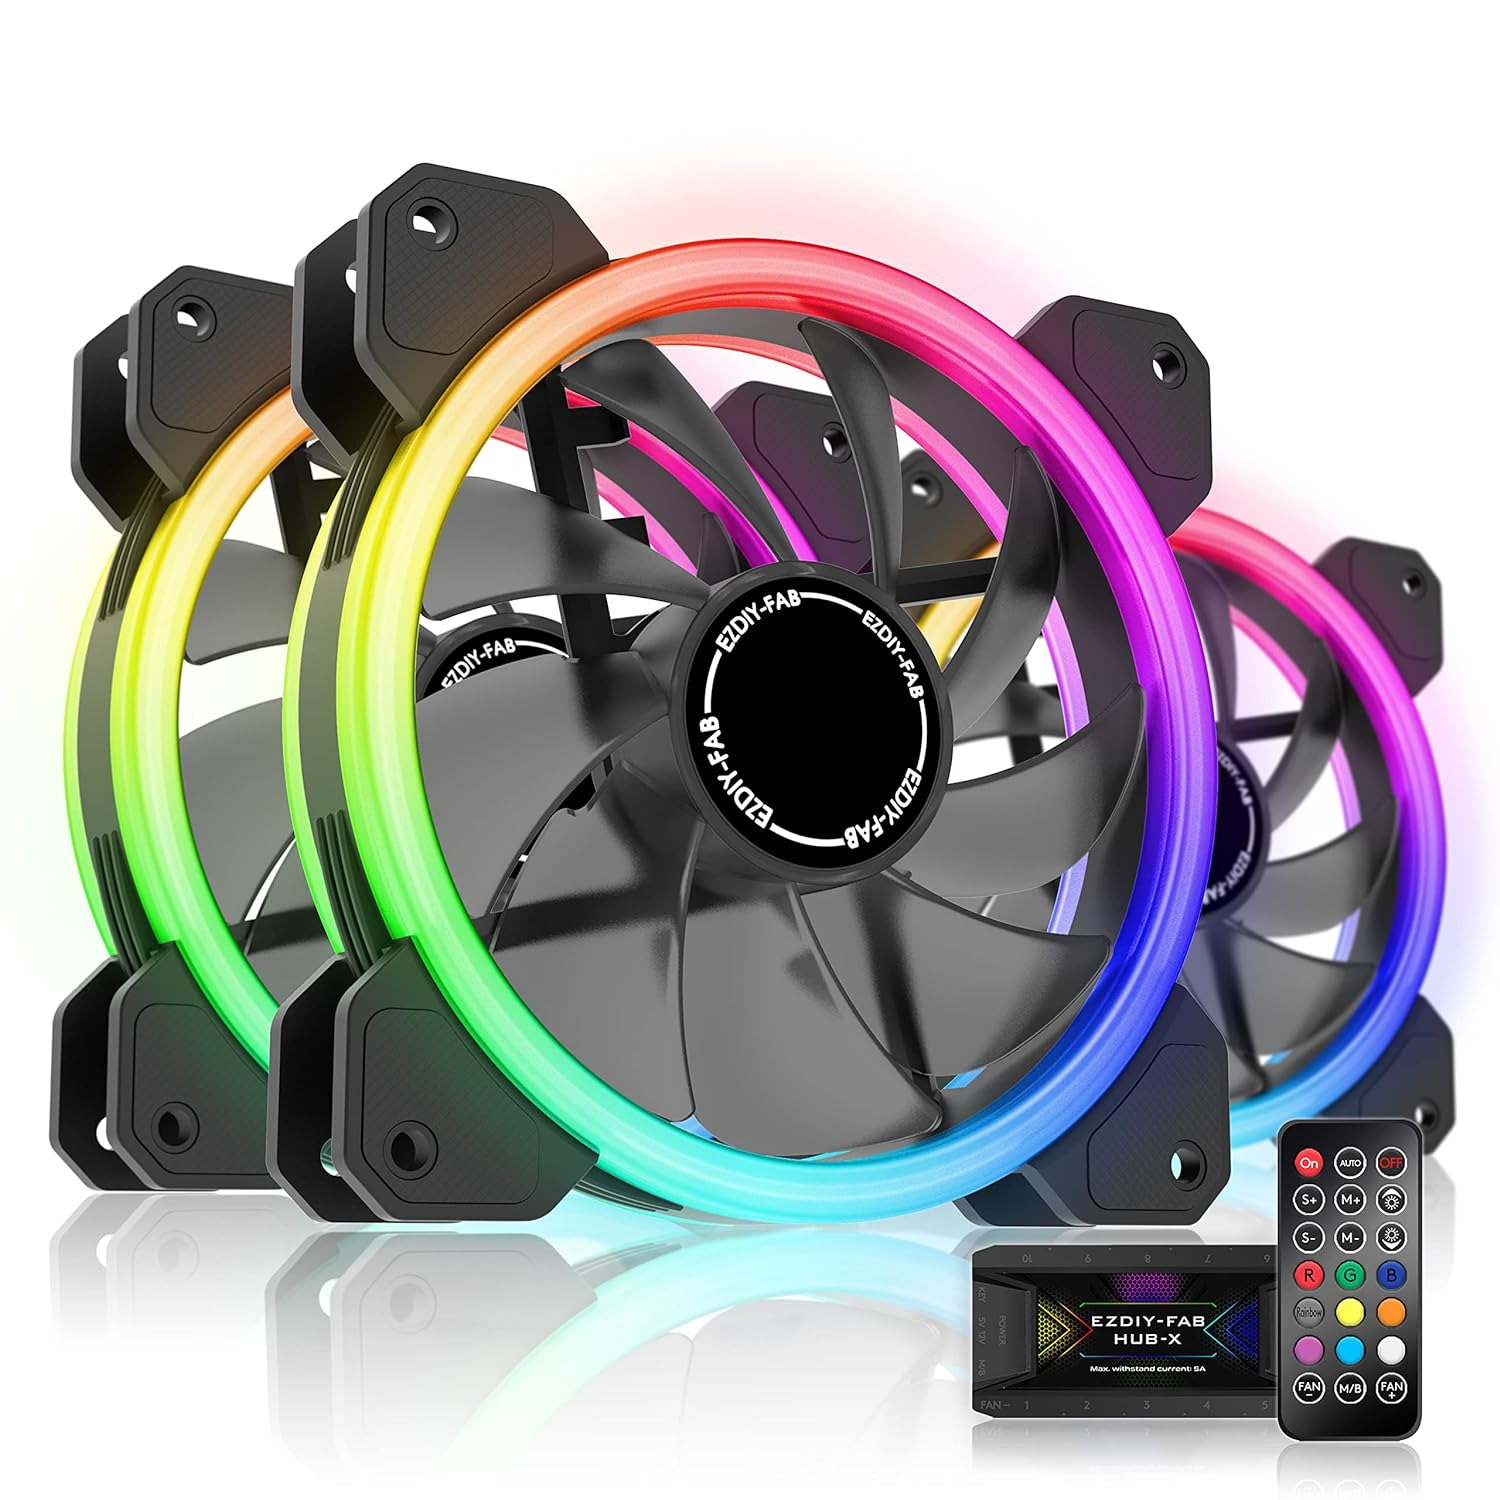 EZDIY-FAB RGB Dual Ring 120Mm Case Fans,5V Motherboard Sync,Speed Adjustable,